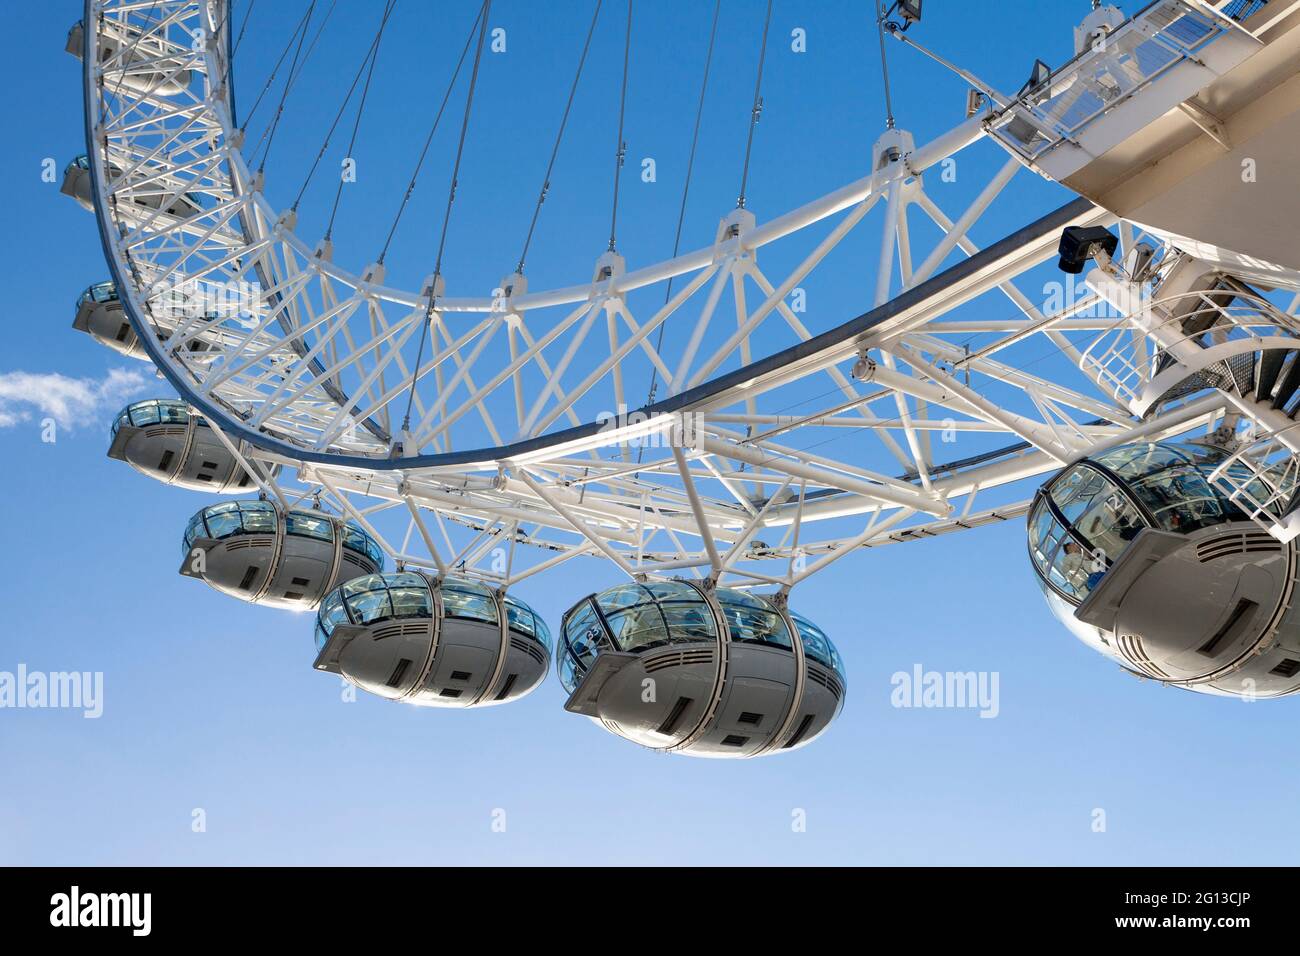 UK, England, London, The London Eye (Millennium Wheel) showing detail of Passenger Capsules. Stock Photo